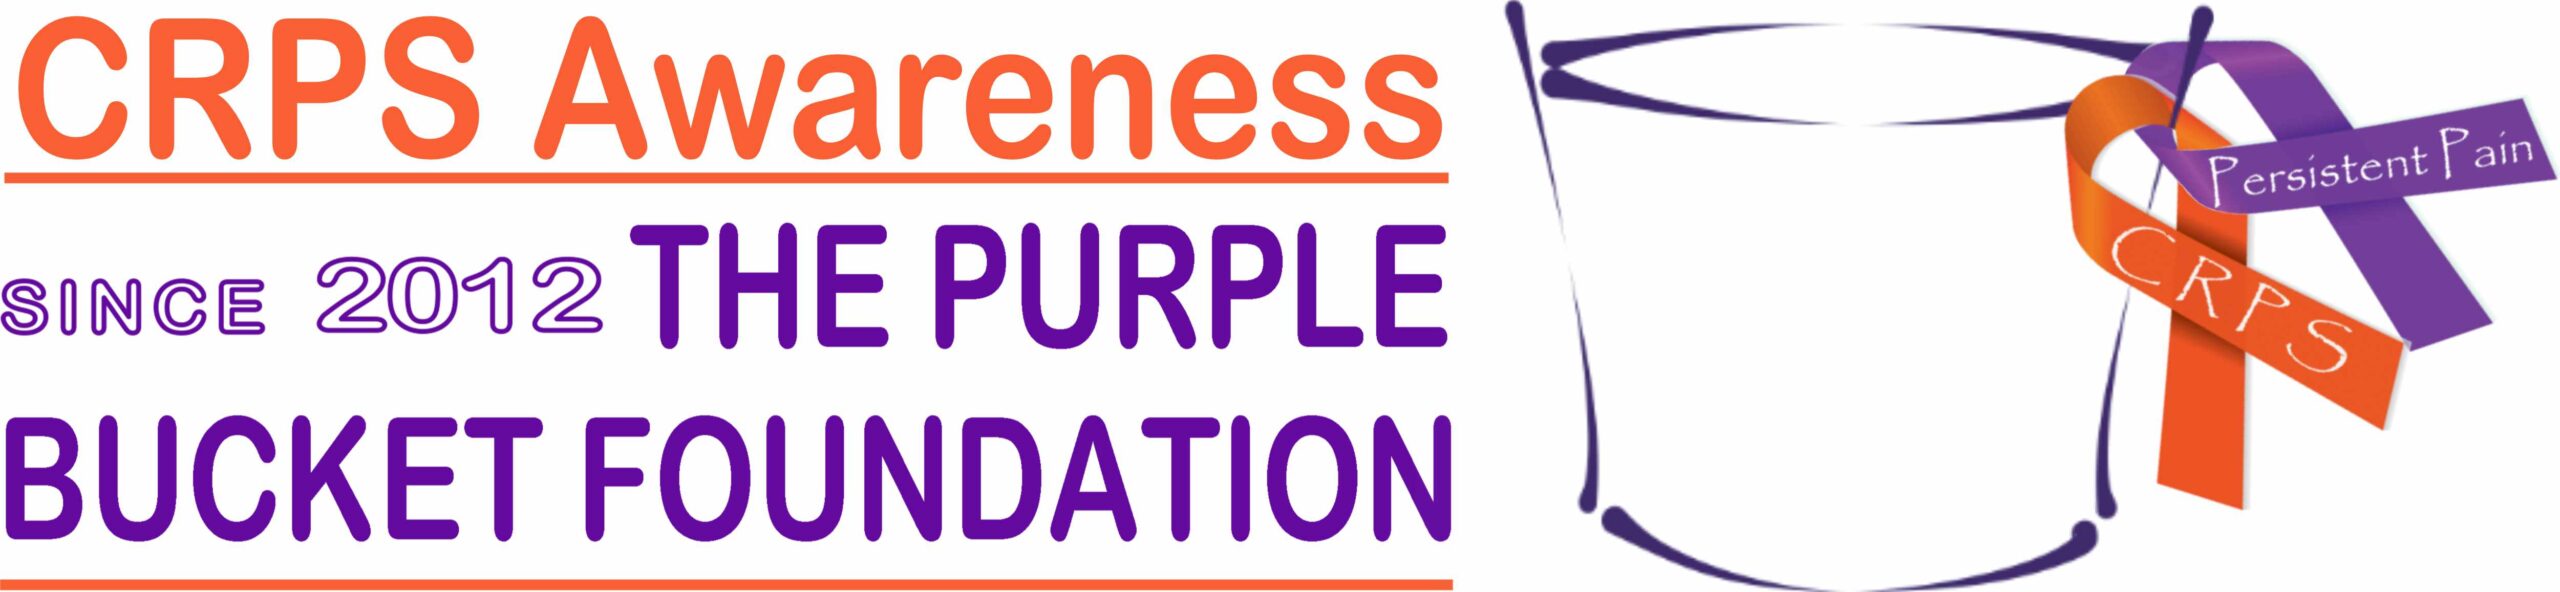 CRPS Awareness – The Purple Bucket Foundation Inc